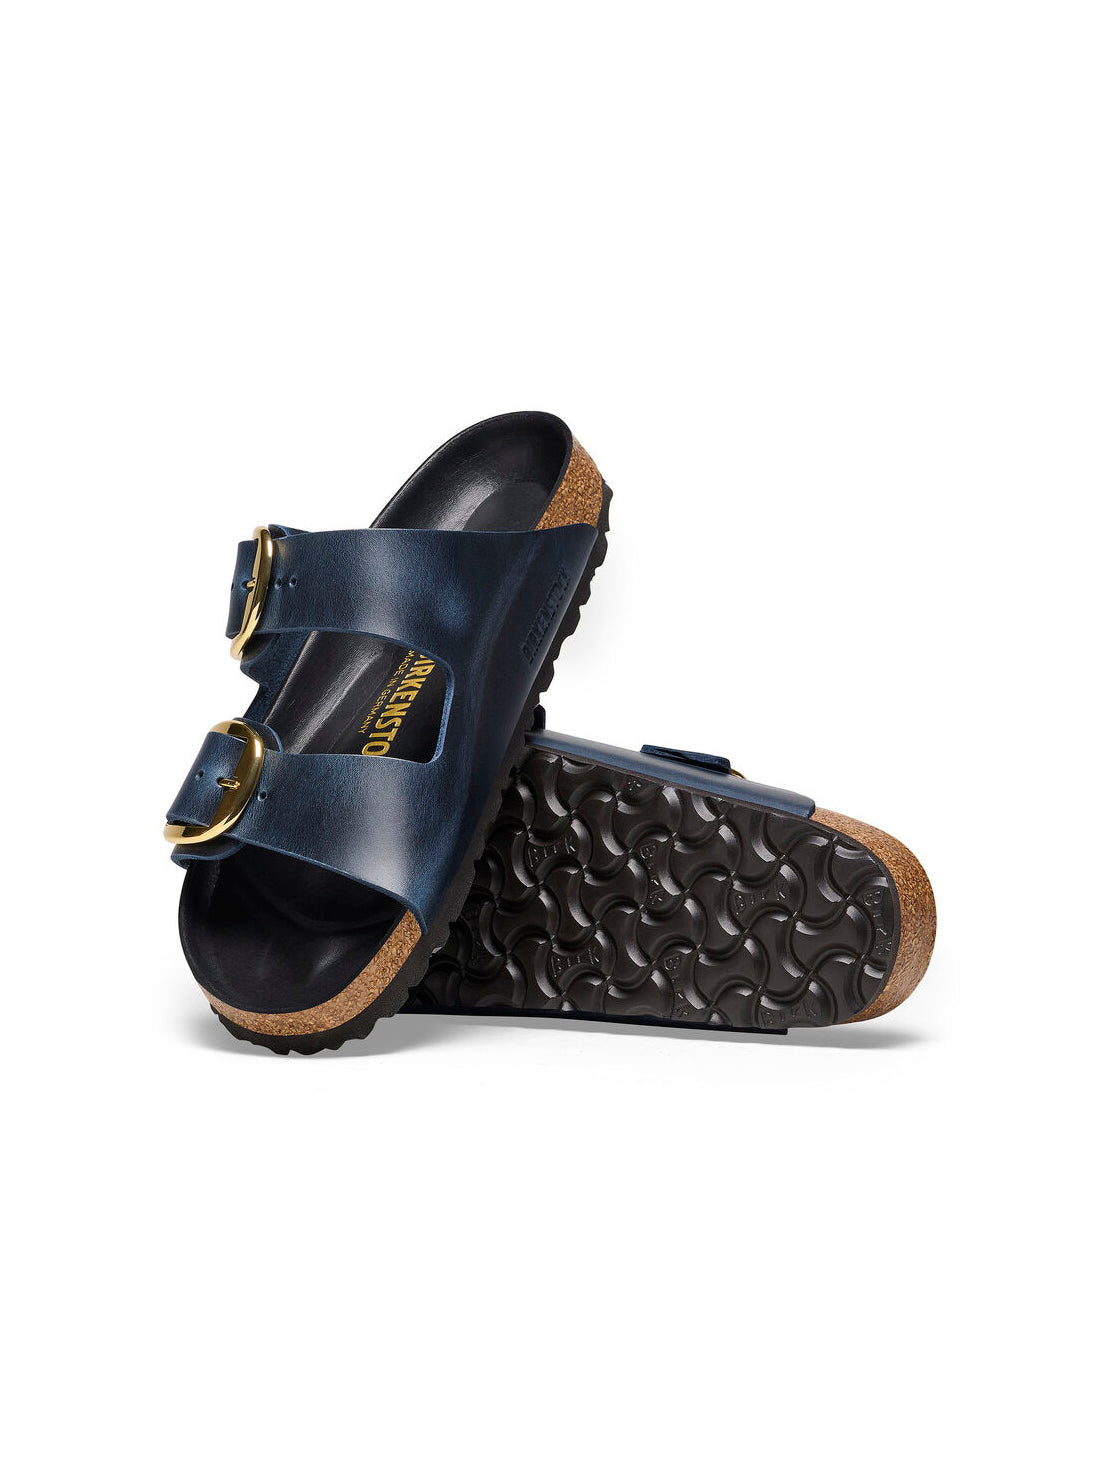 birkenstock arizona big buckle sandals in oiled leather blue narrow